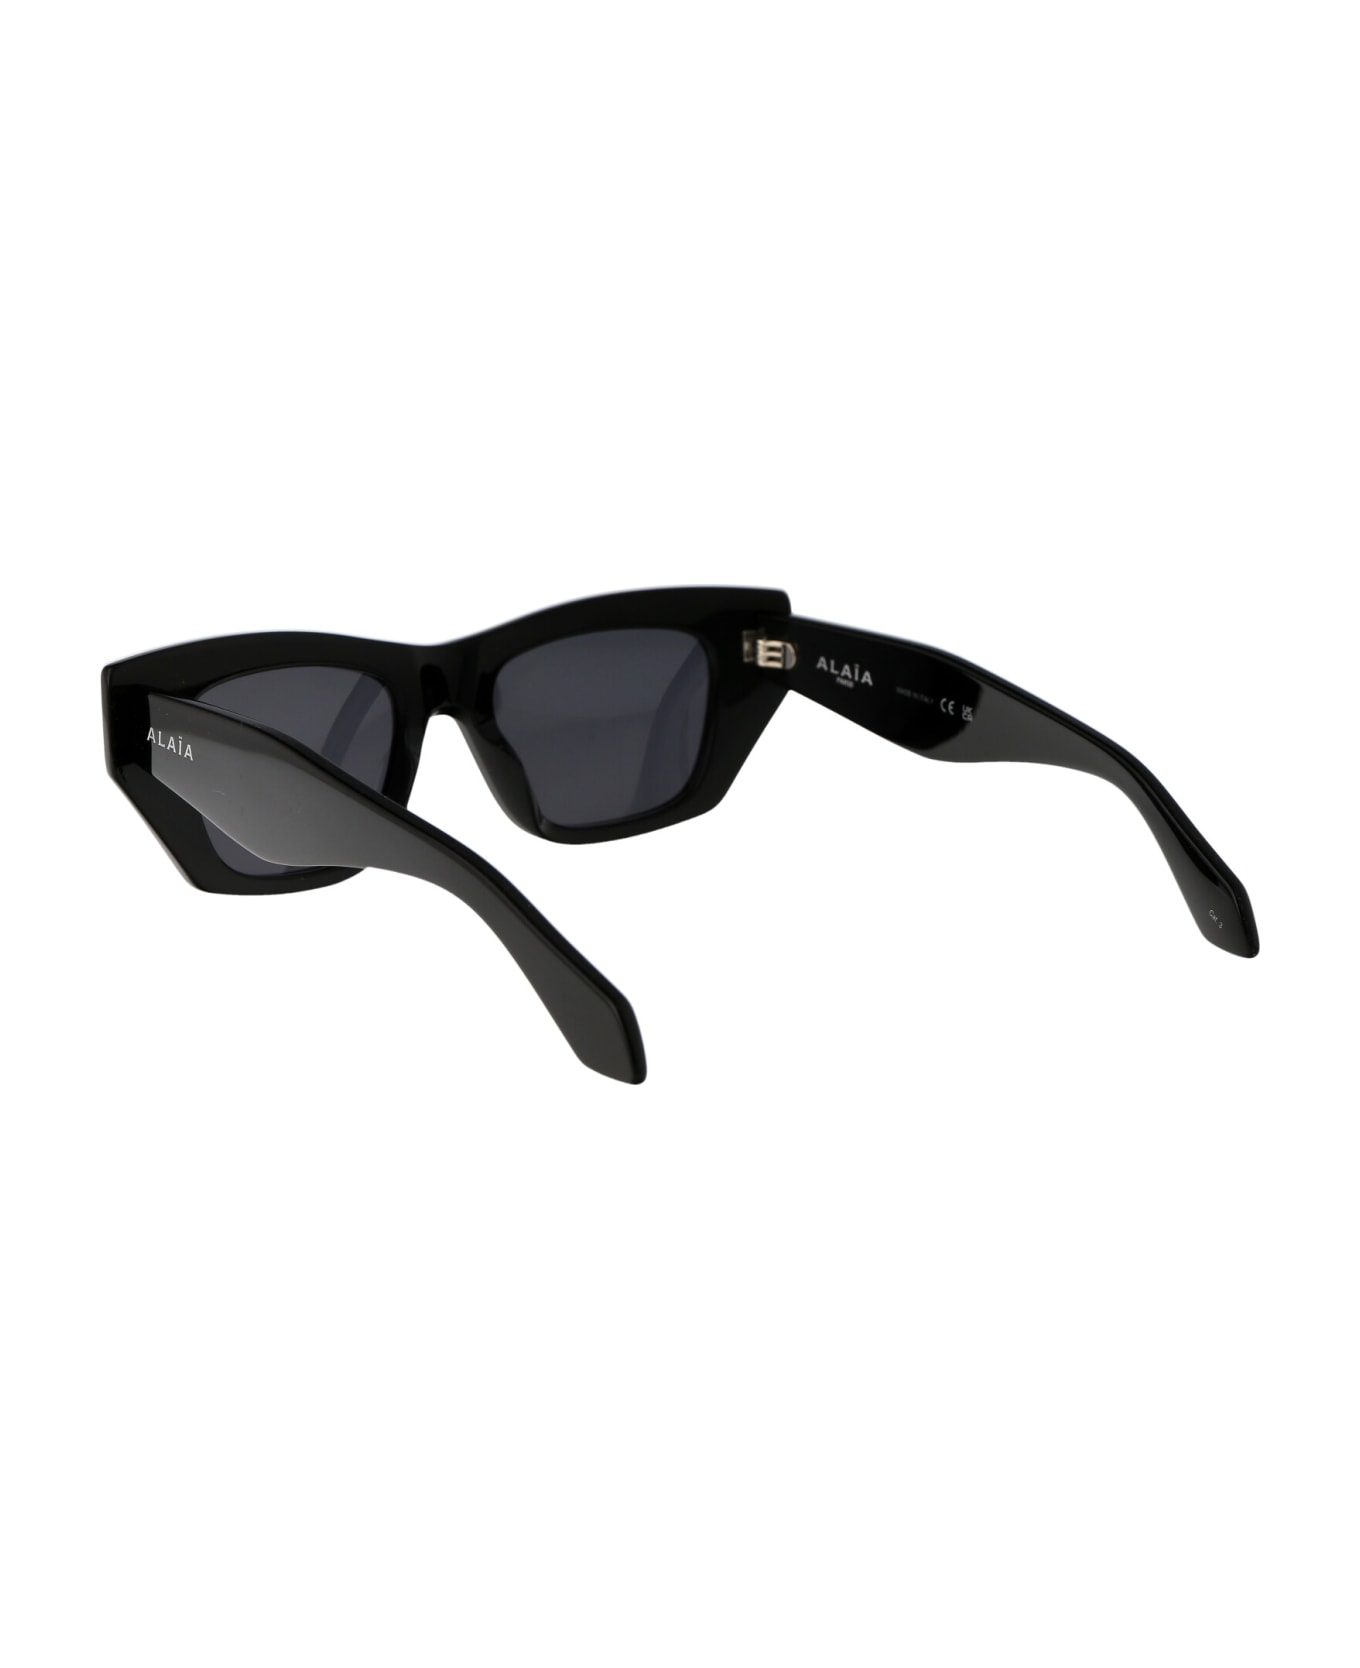 Alaia Aa0074s Sunglasses - 001 BLACK BLACK GREY